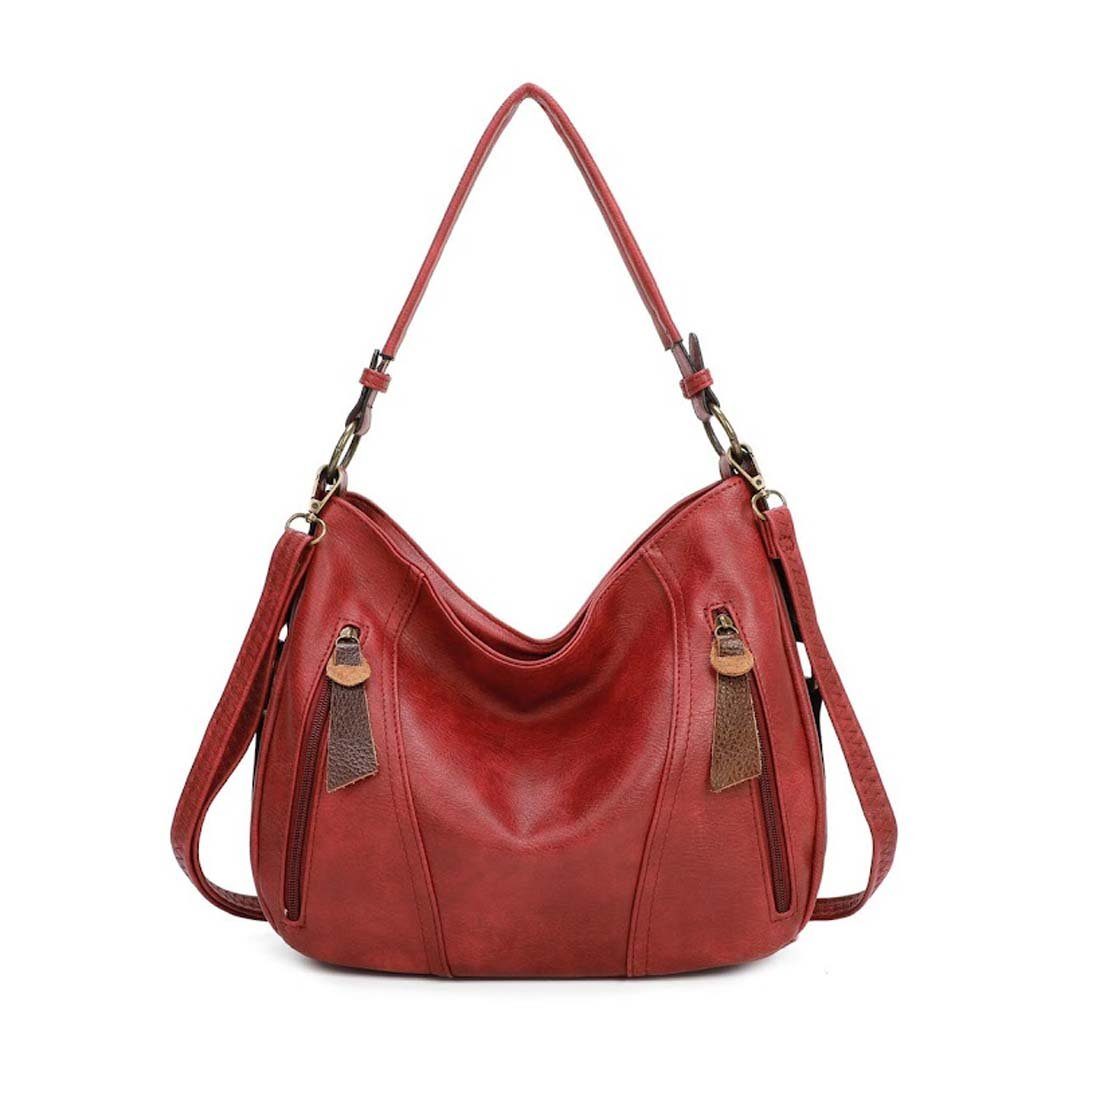 ITALYSHOP24 Schultertasche Damen Tasche Shopper Hobo-Bag Crossbody CrossOver, als Handtasche, Umhängetasche, Shopper tragbar